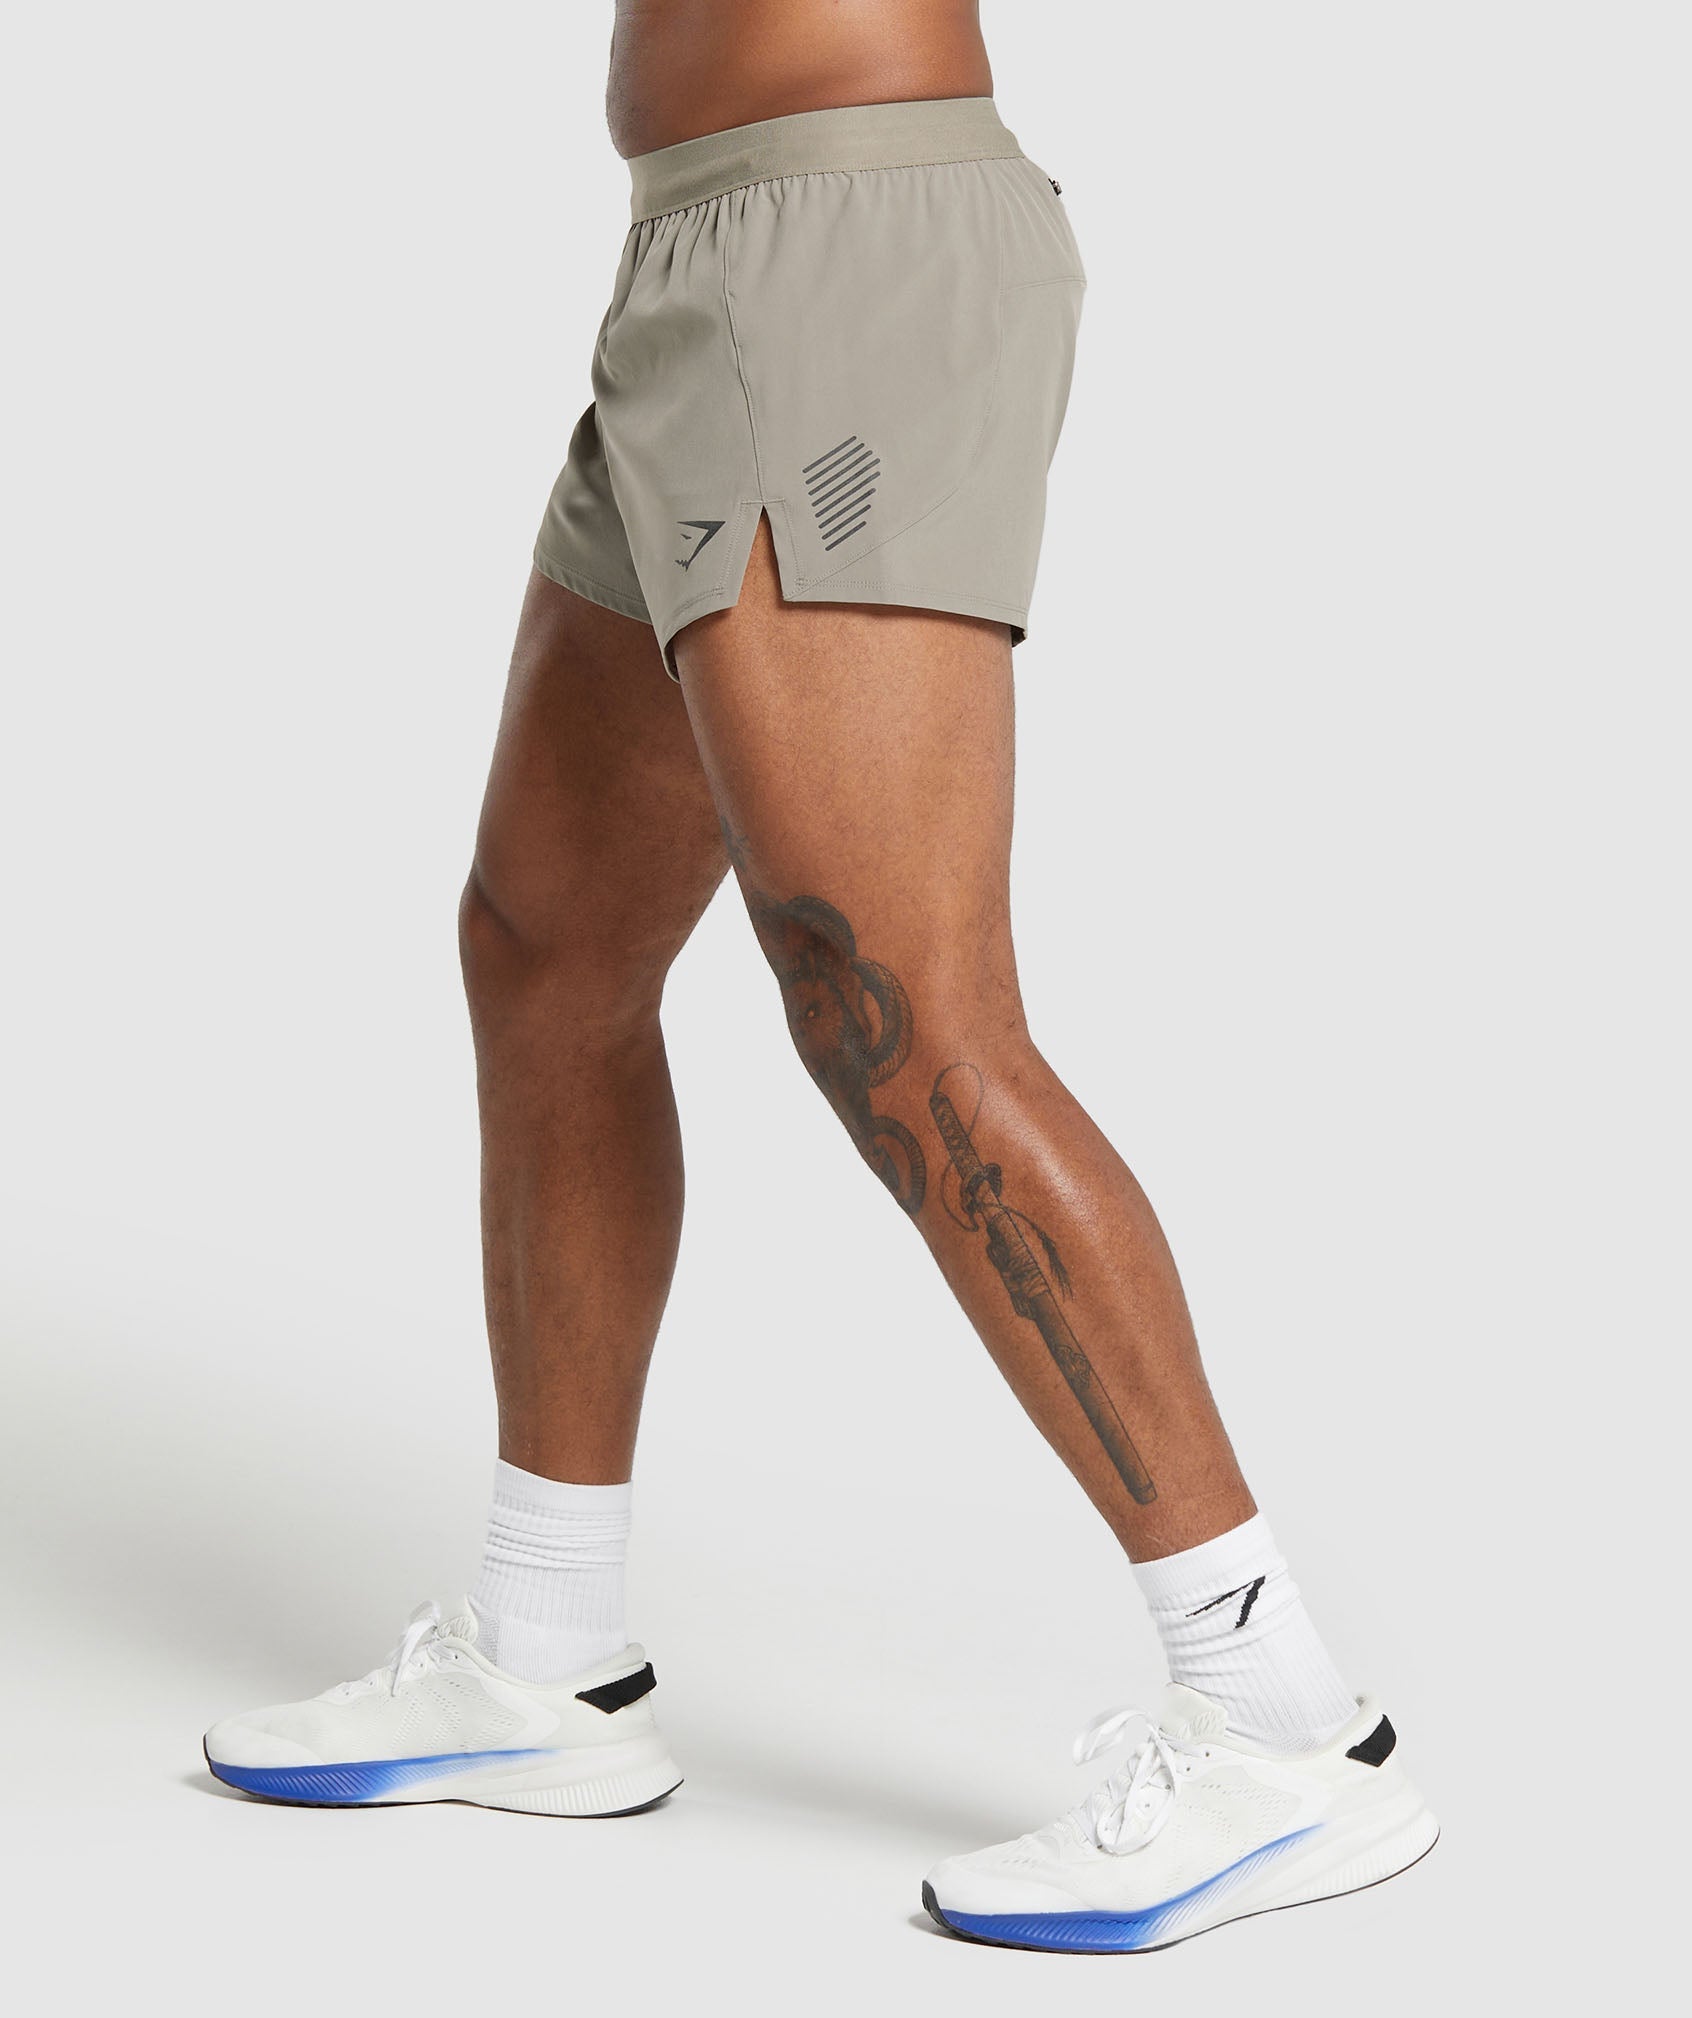 Apex Run 5" Shorts in Linen Brown - view 3